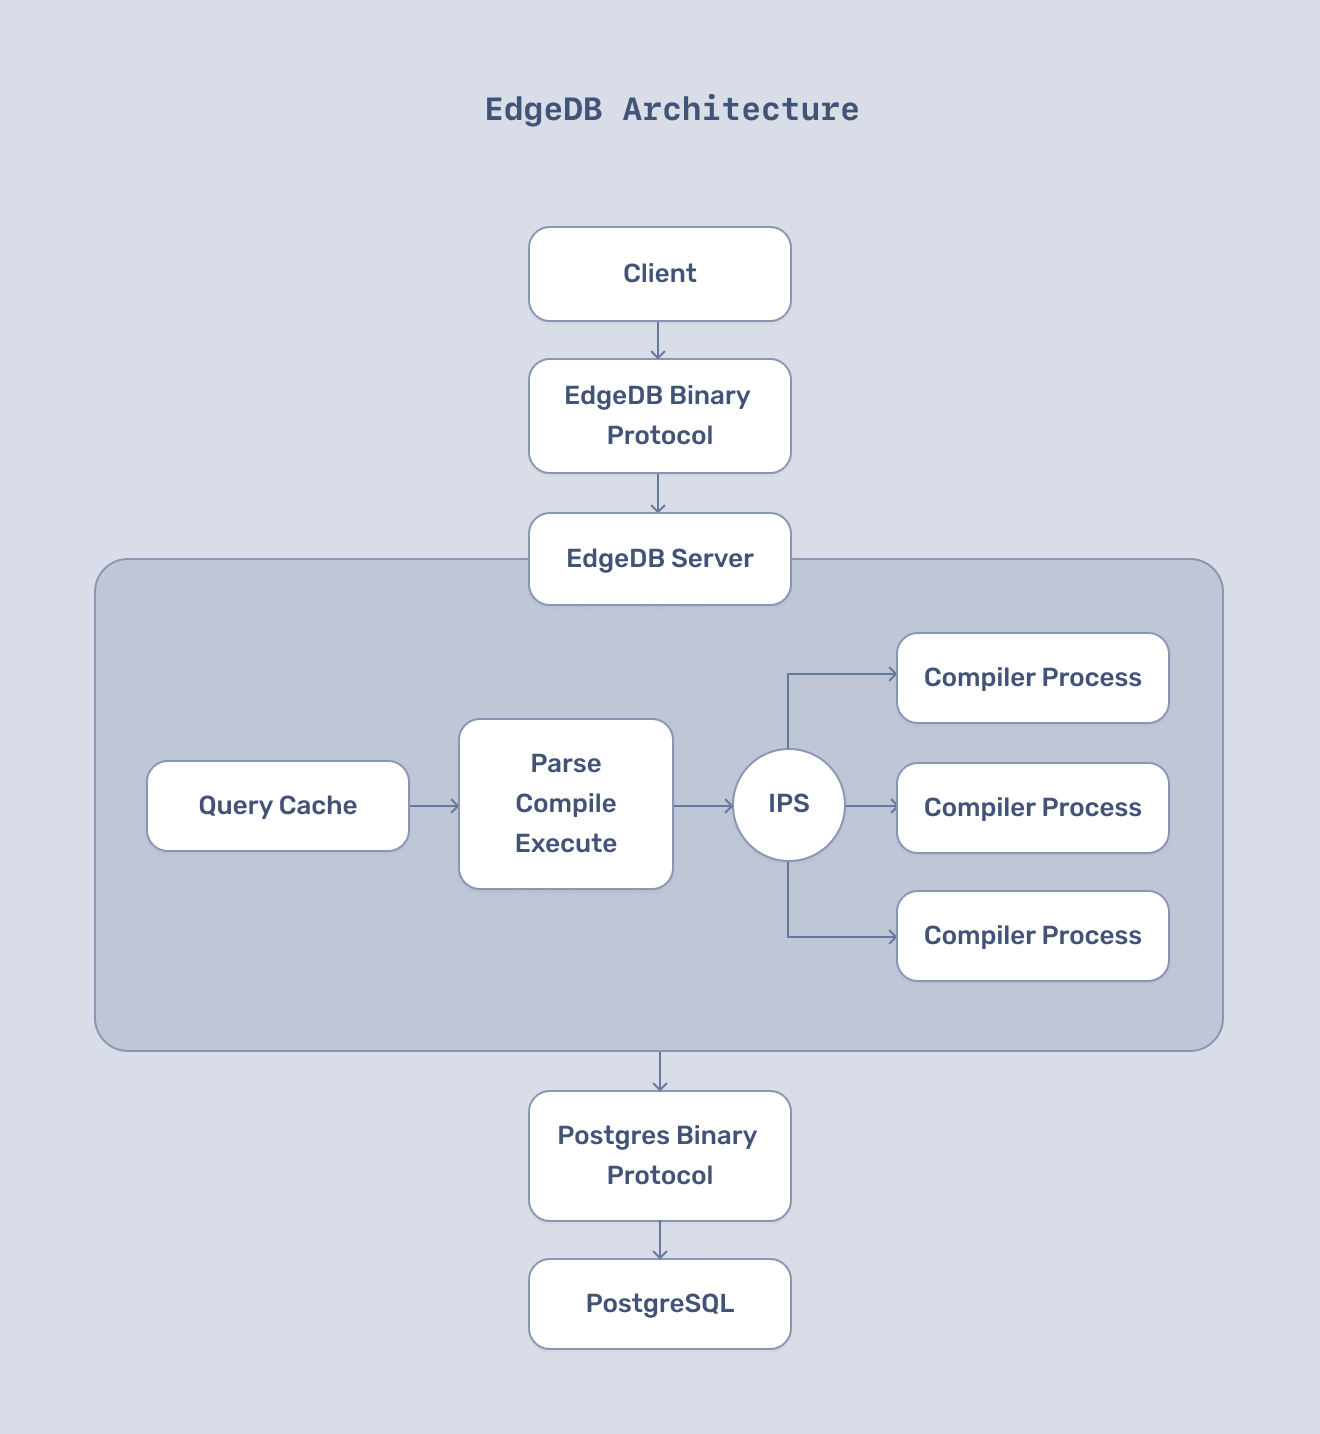 EdgeDB Architecture